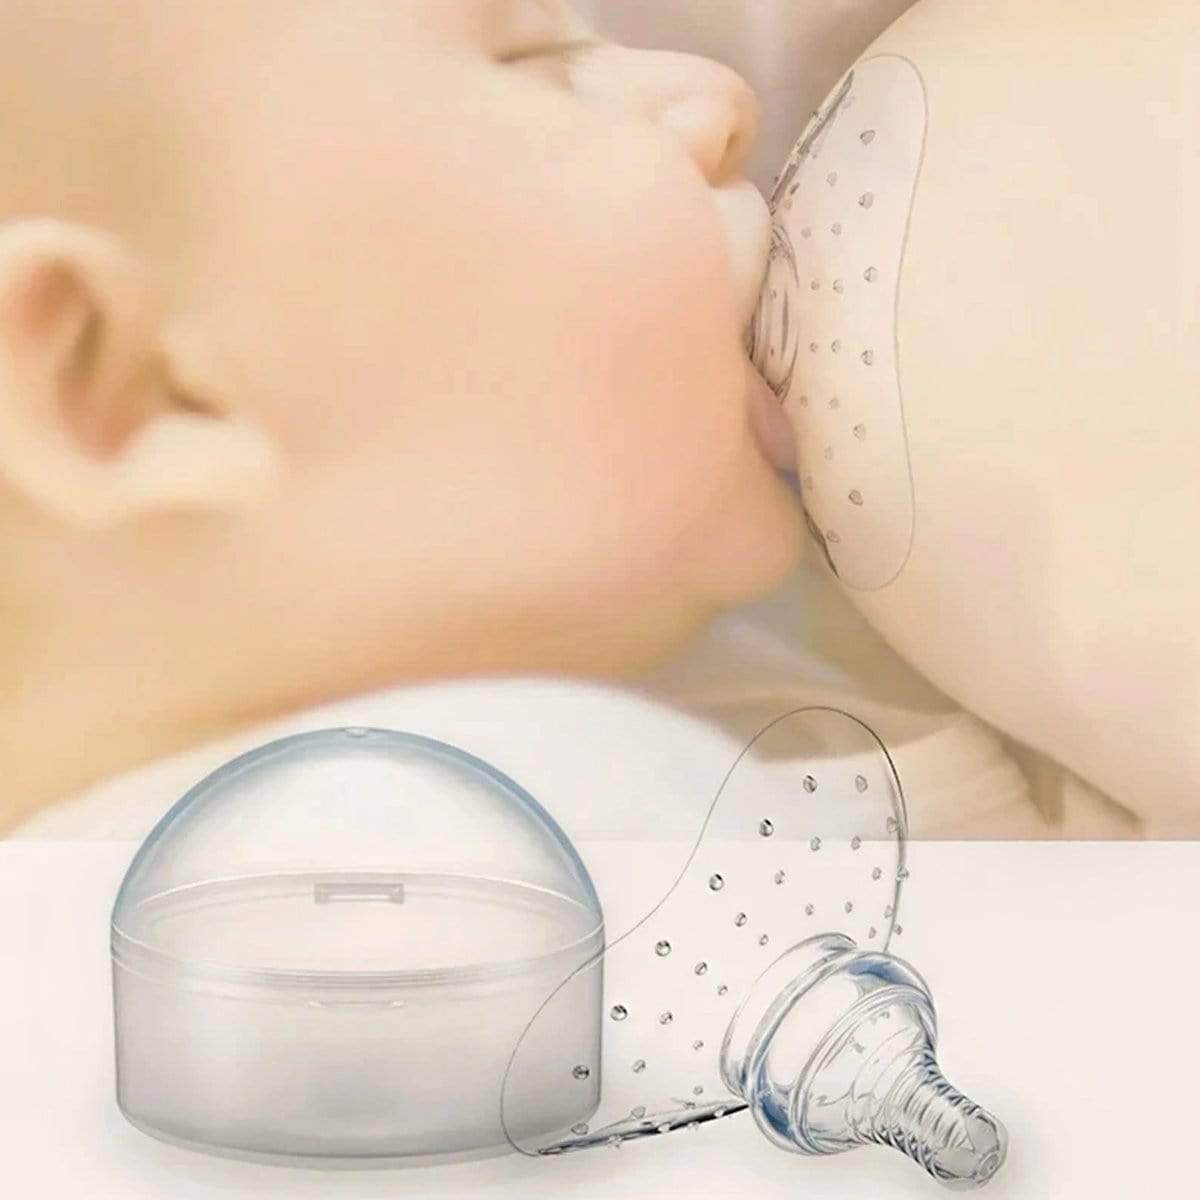 Food-Grade Silicone / Contact Nipple Shields Protectors /Breastfeeding Aid  w/Box